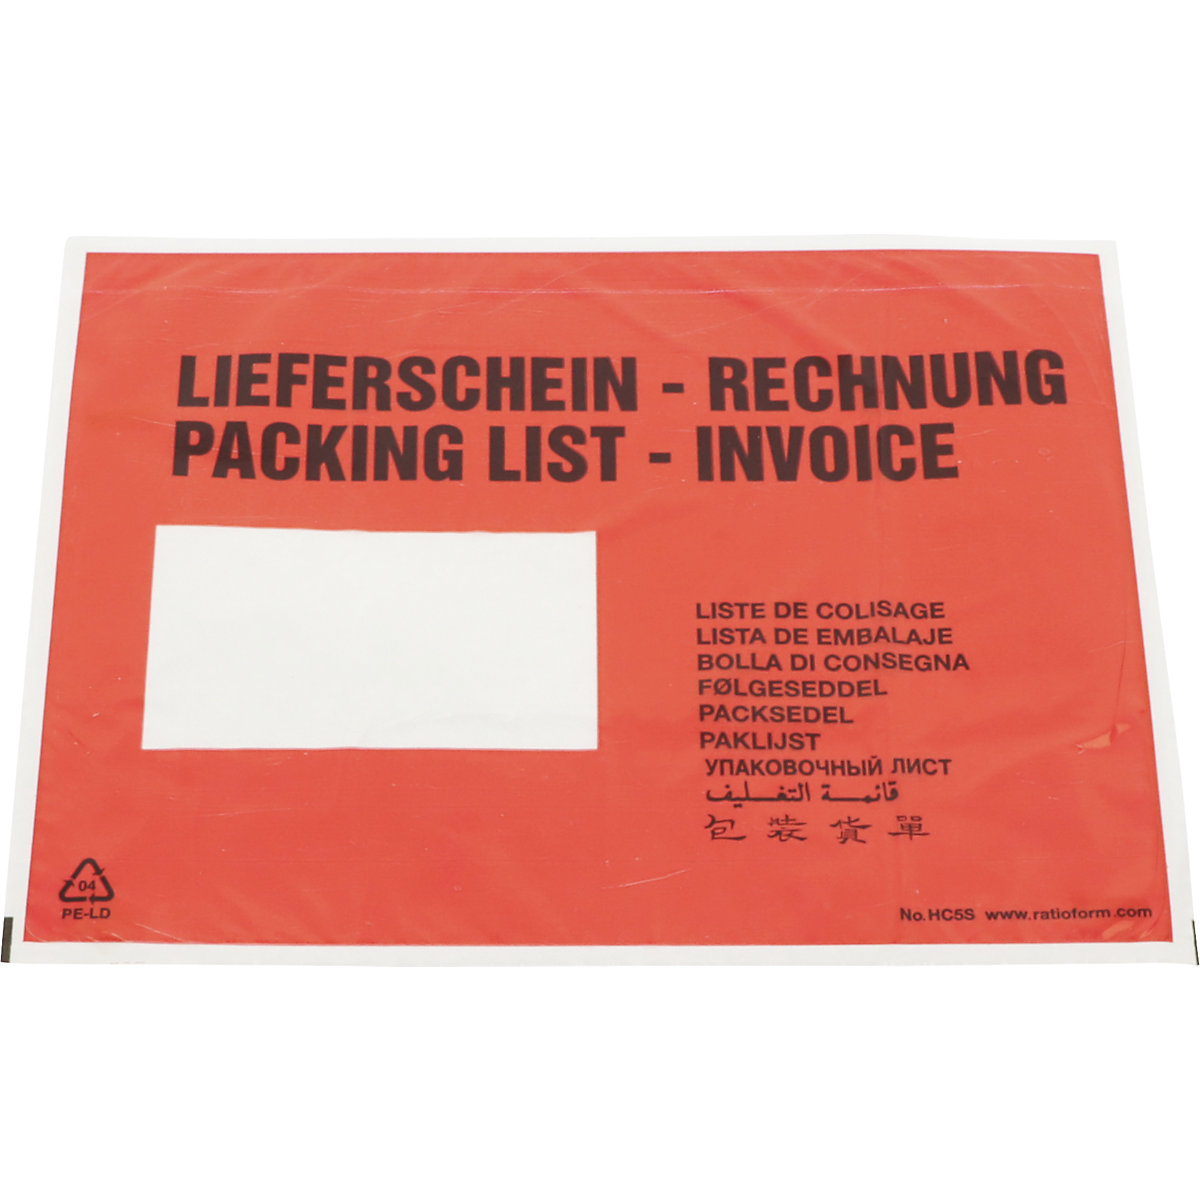 Recycling-Dokumententaschen, Aufdruck Lieferschein – Rechnung, VE 1000 Stk, LxB 240 x 185 mm-3